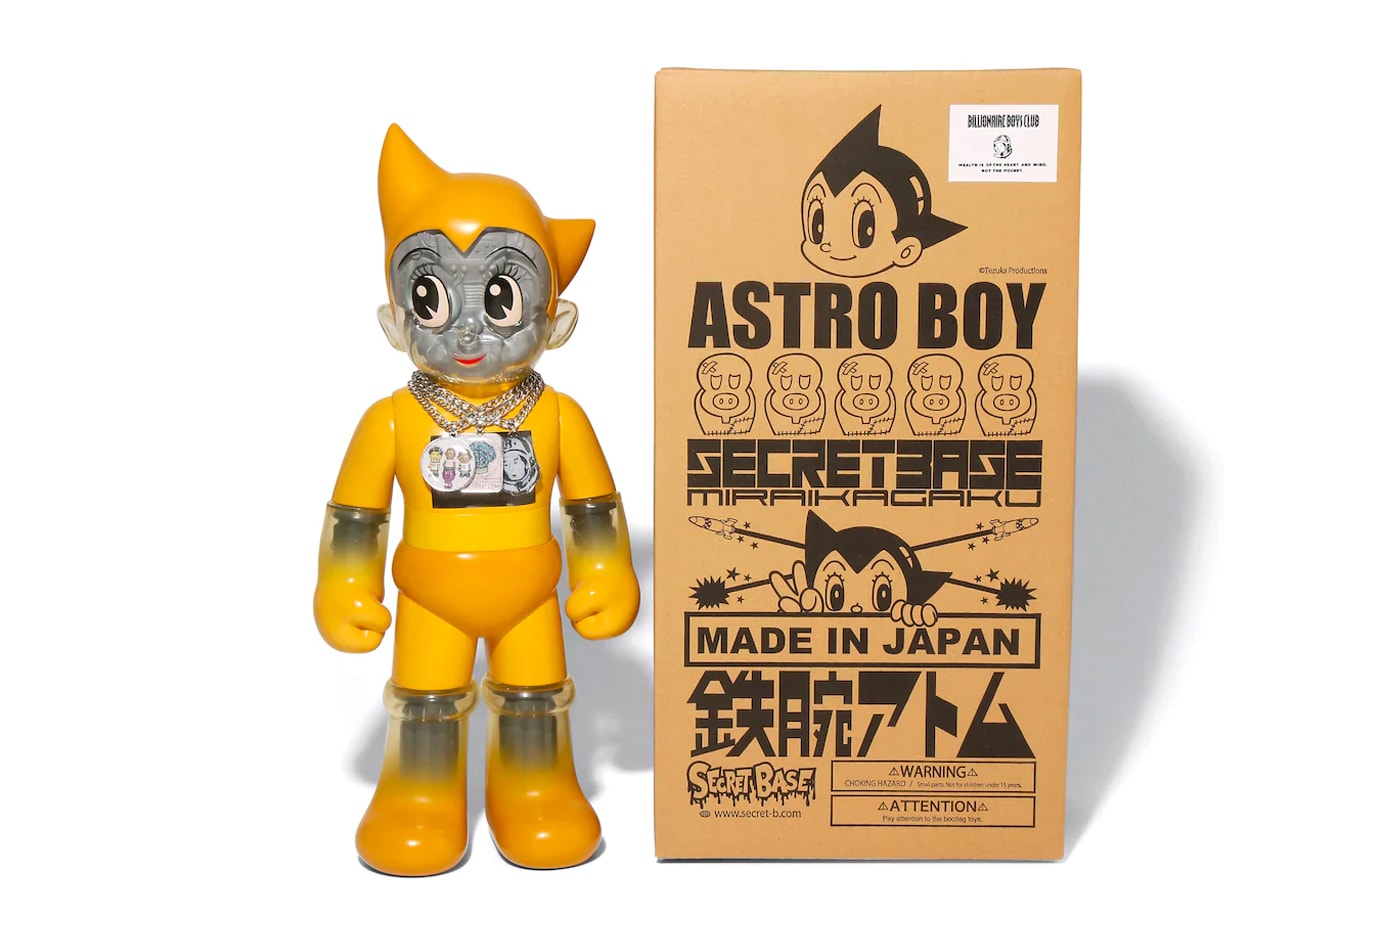 Billionaire Boys Club x SECRET BASE Astro Boy Limited-Edition Figure Info